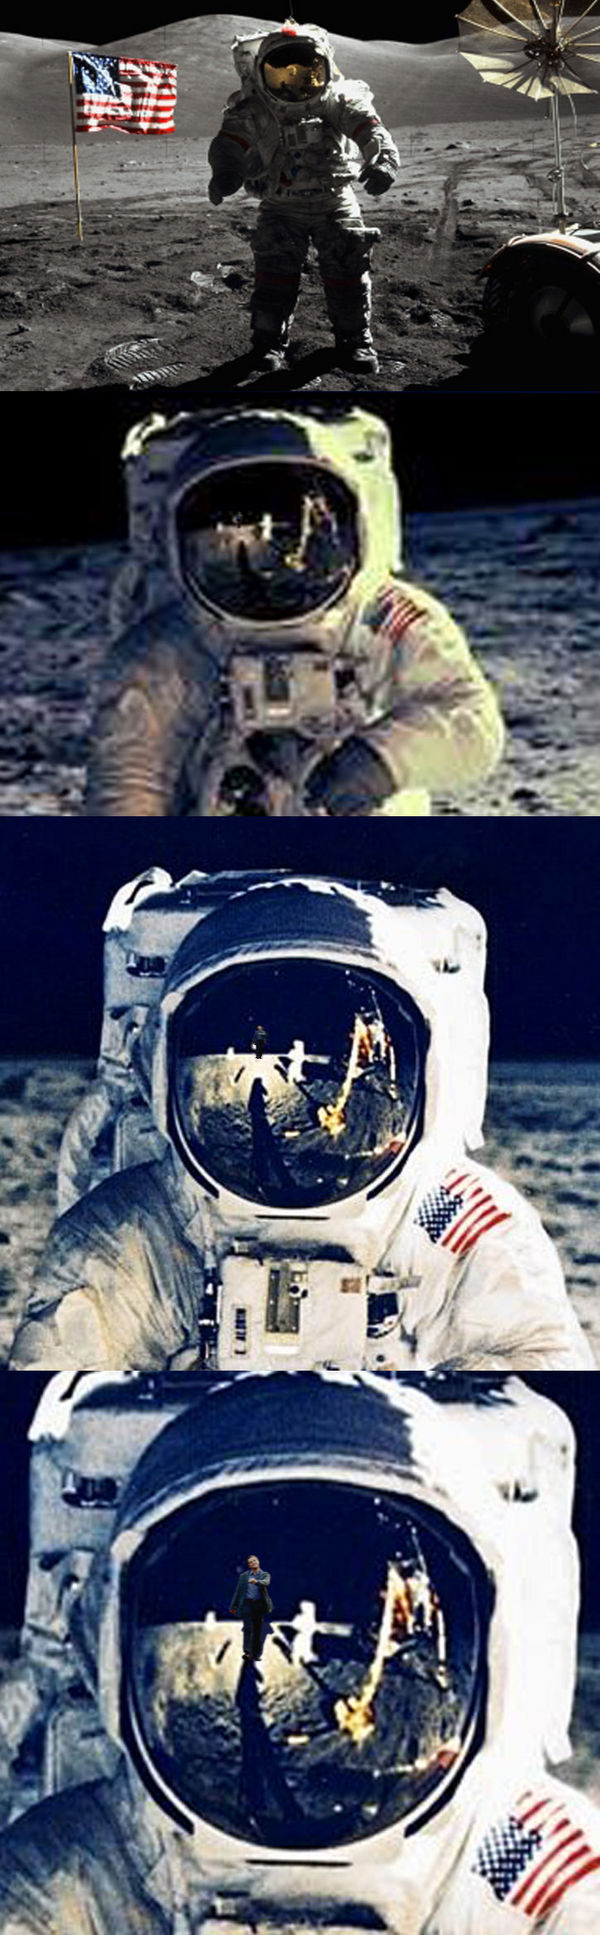 _leo_strut_moon_landing